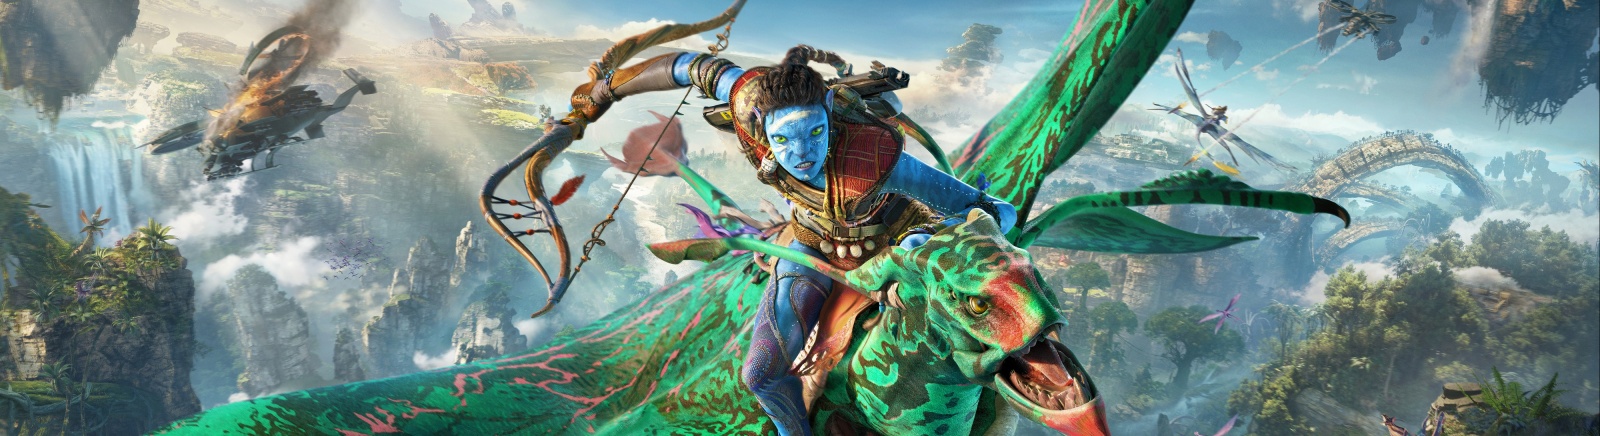 Дата выхода Avatar: Frontiers of Pandora (Аватар: Рубежи Пандоры)  на PC, PS5 и Xbox Series X/S в России и во всем мире